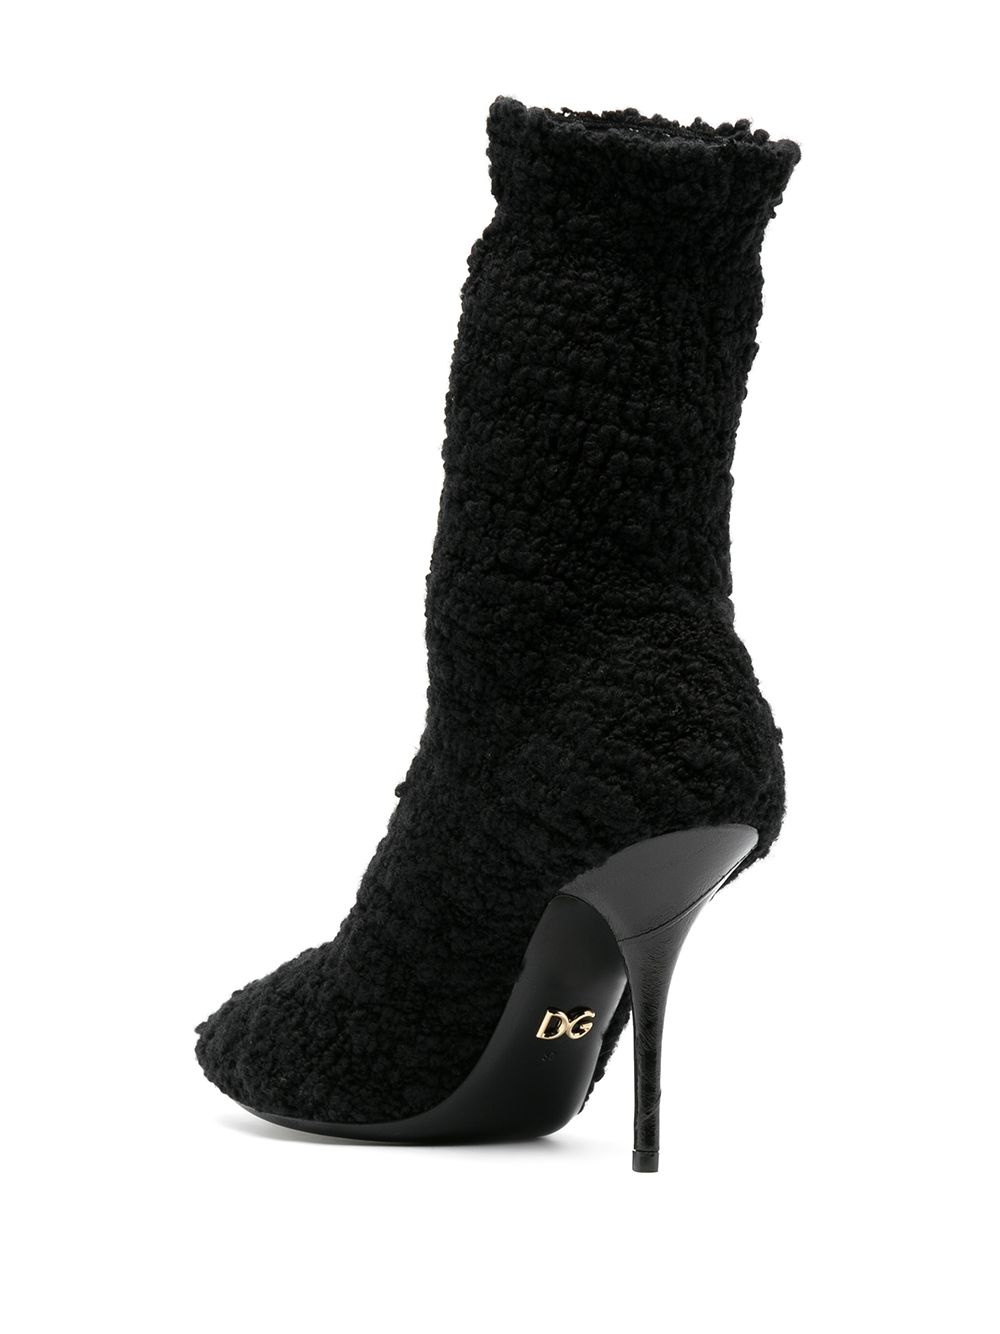 shearling stiletto heel boots - 3